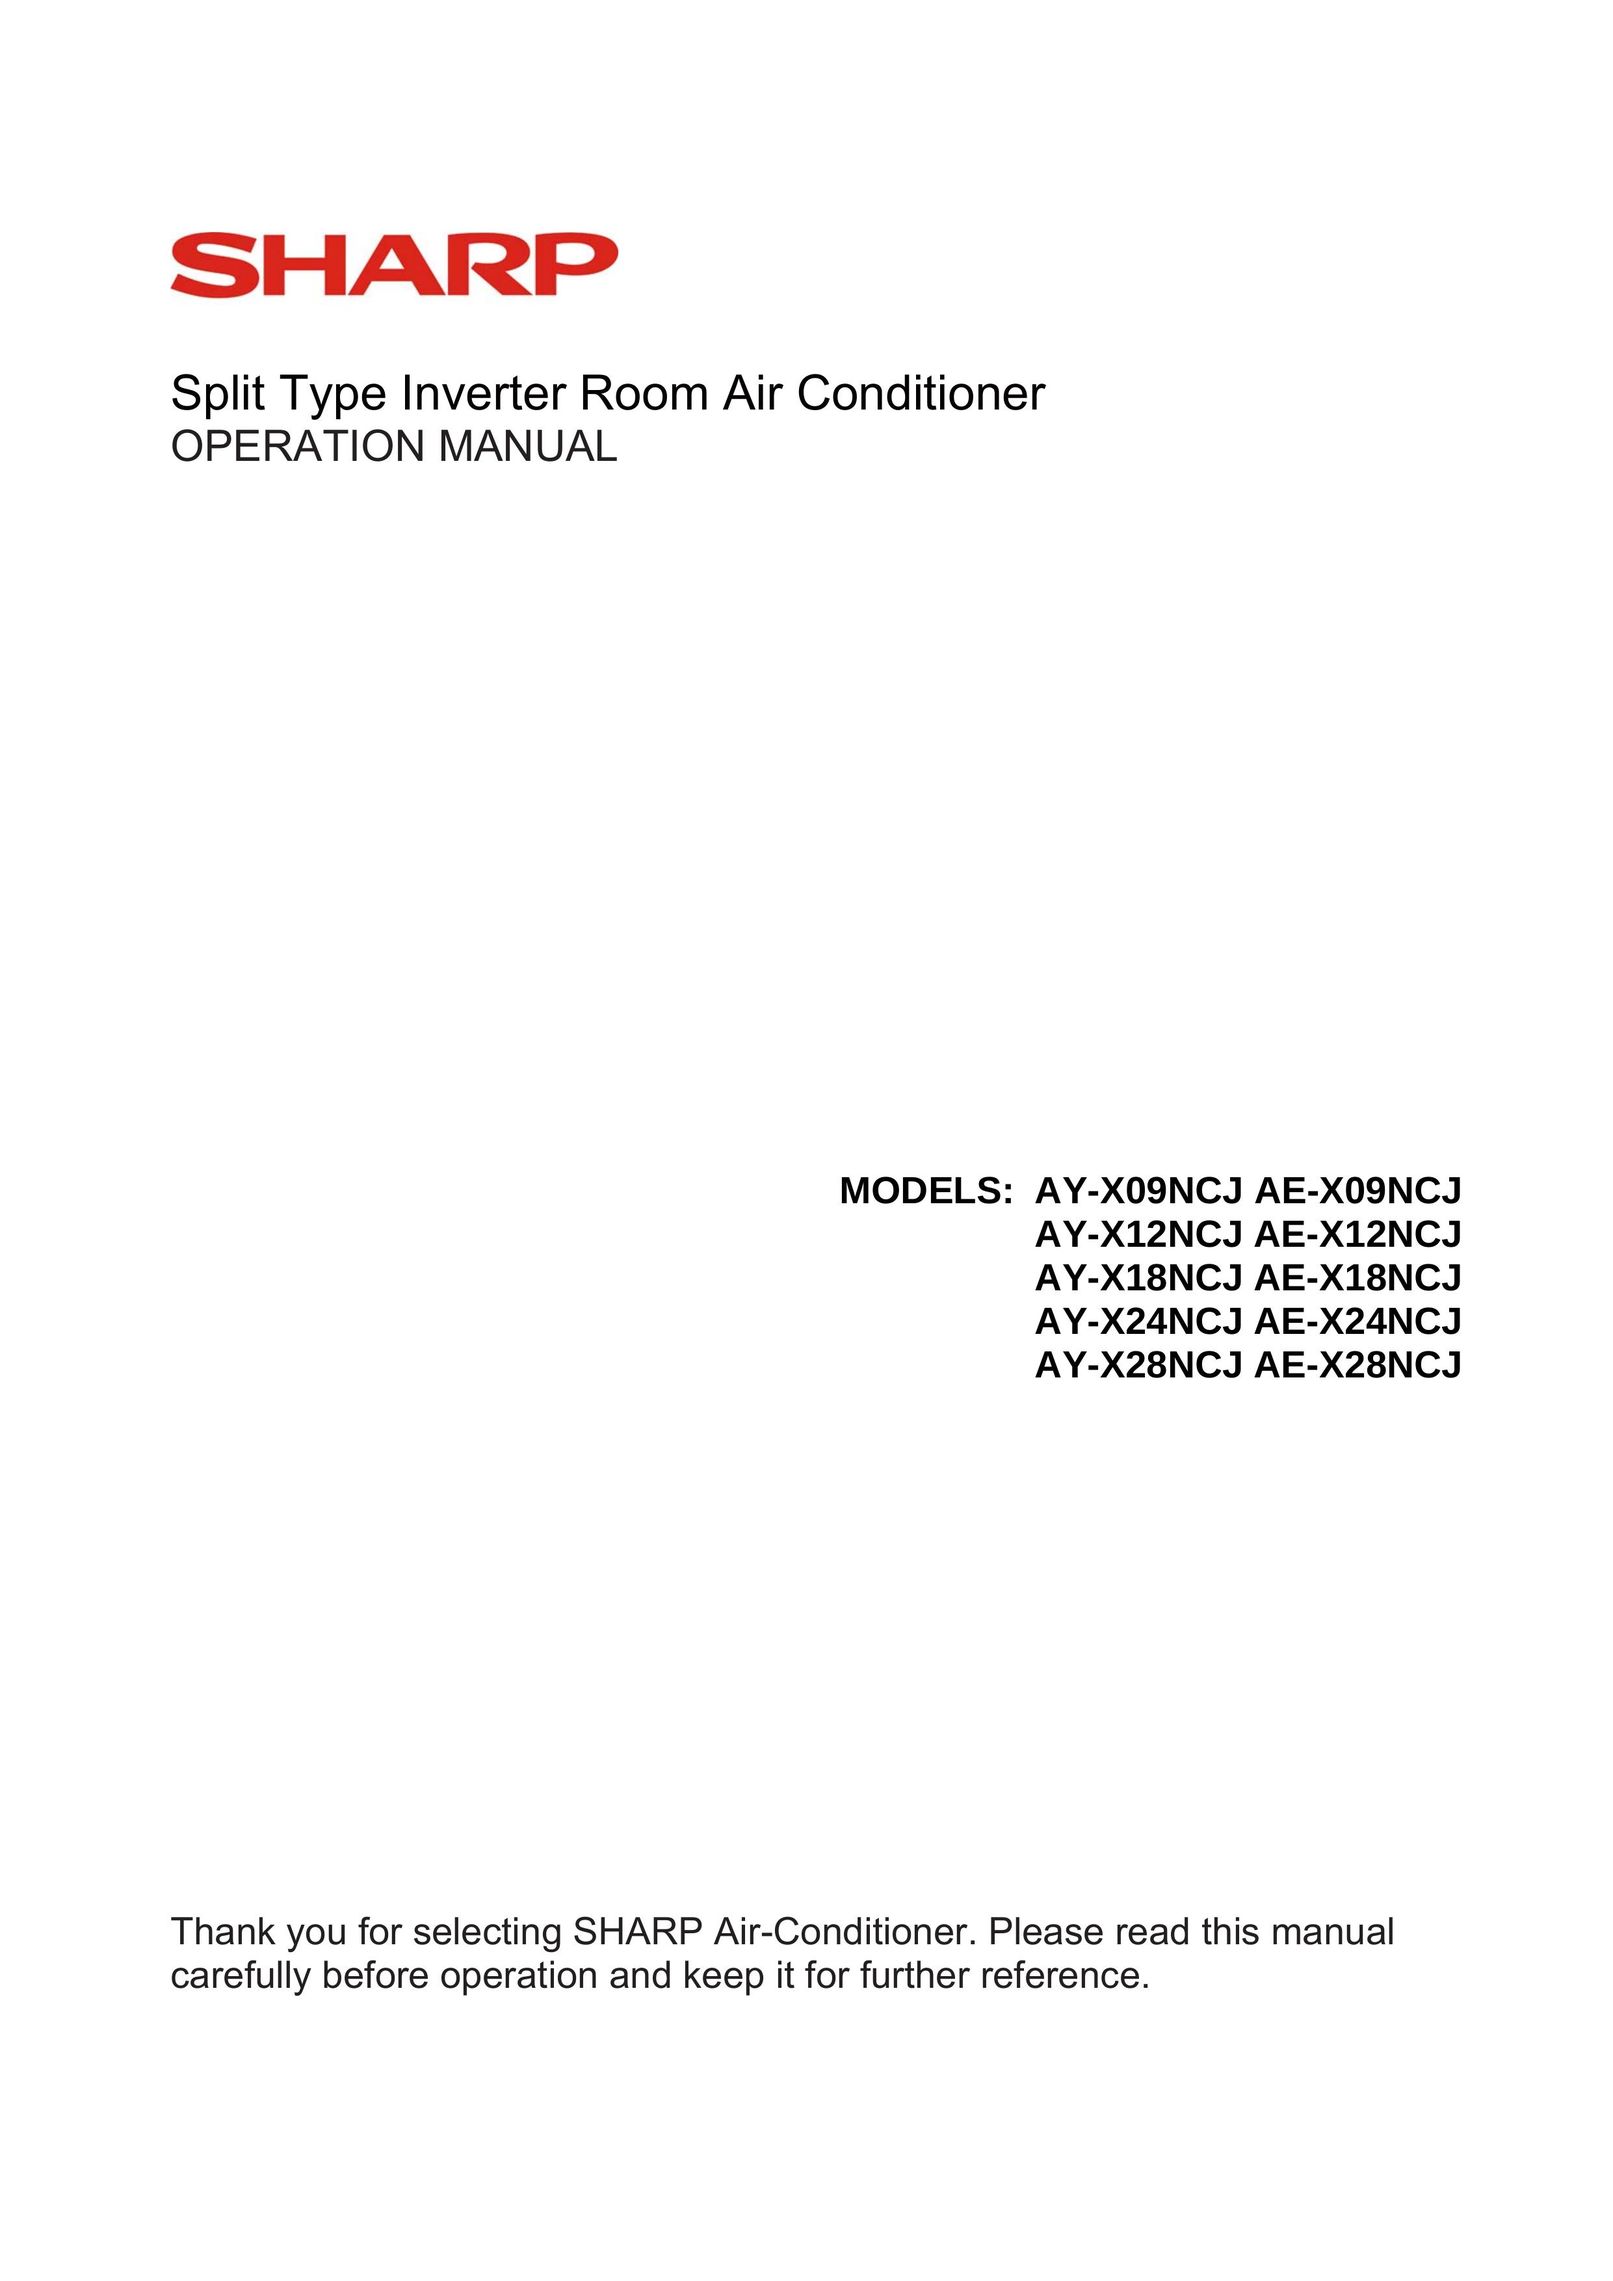 Sharp AE-X28NCJ Air Conditioner User Manual